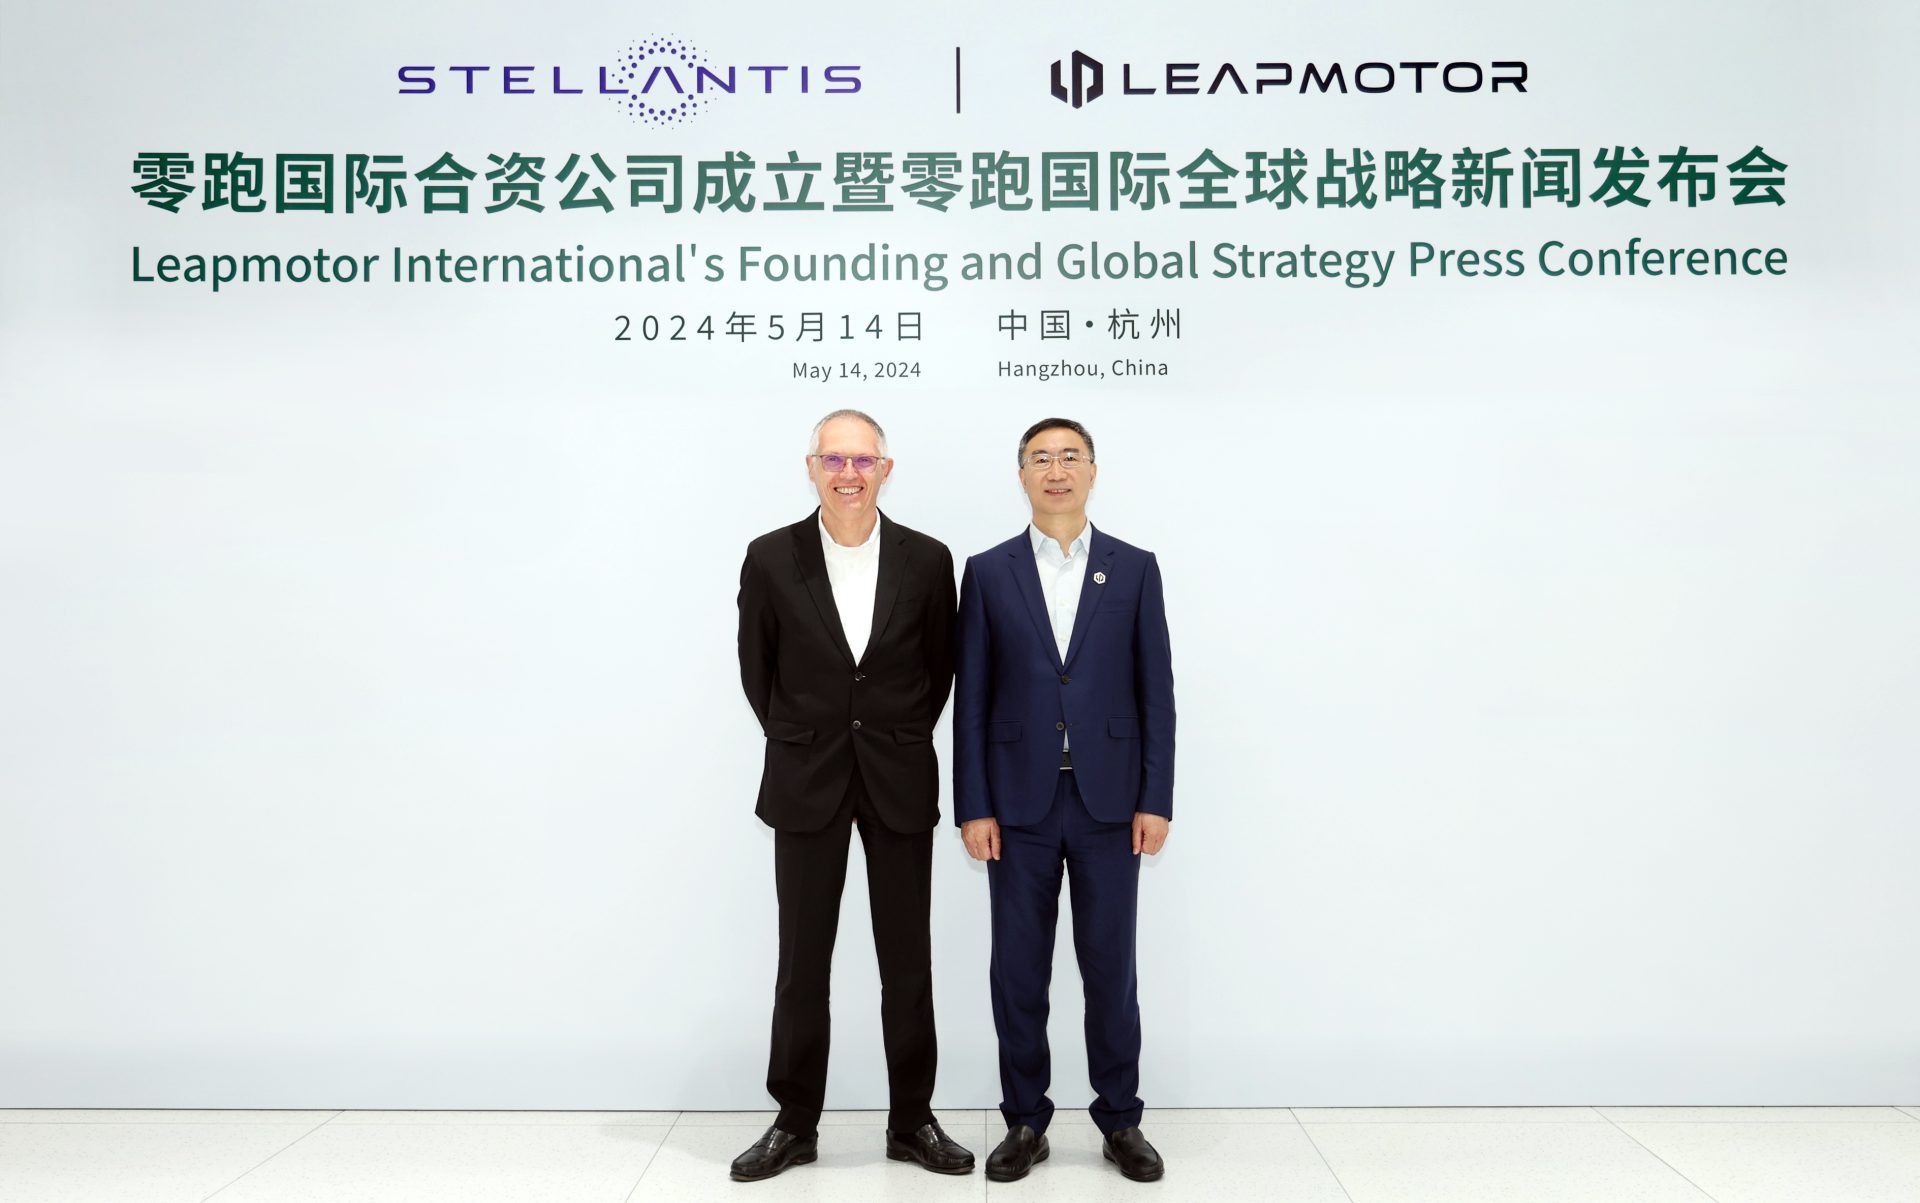 Hero Stellantis CEO Carlos Tavares Leapmotor Founder Chairman and CEO Jiangming Zhu Η Stellantis και η Leapmotor ετοιμάζονται να λανσάρουν ηλεκτρικά οχήματα στην Ελλάδα στο πλαίσιο της παγκόσμιας στρατηγικής επέκτασης